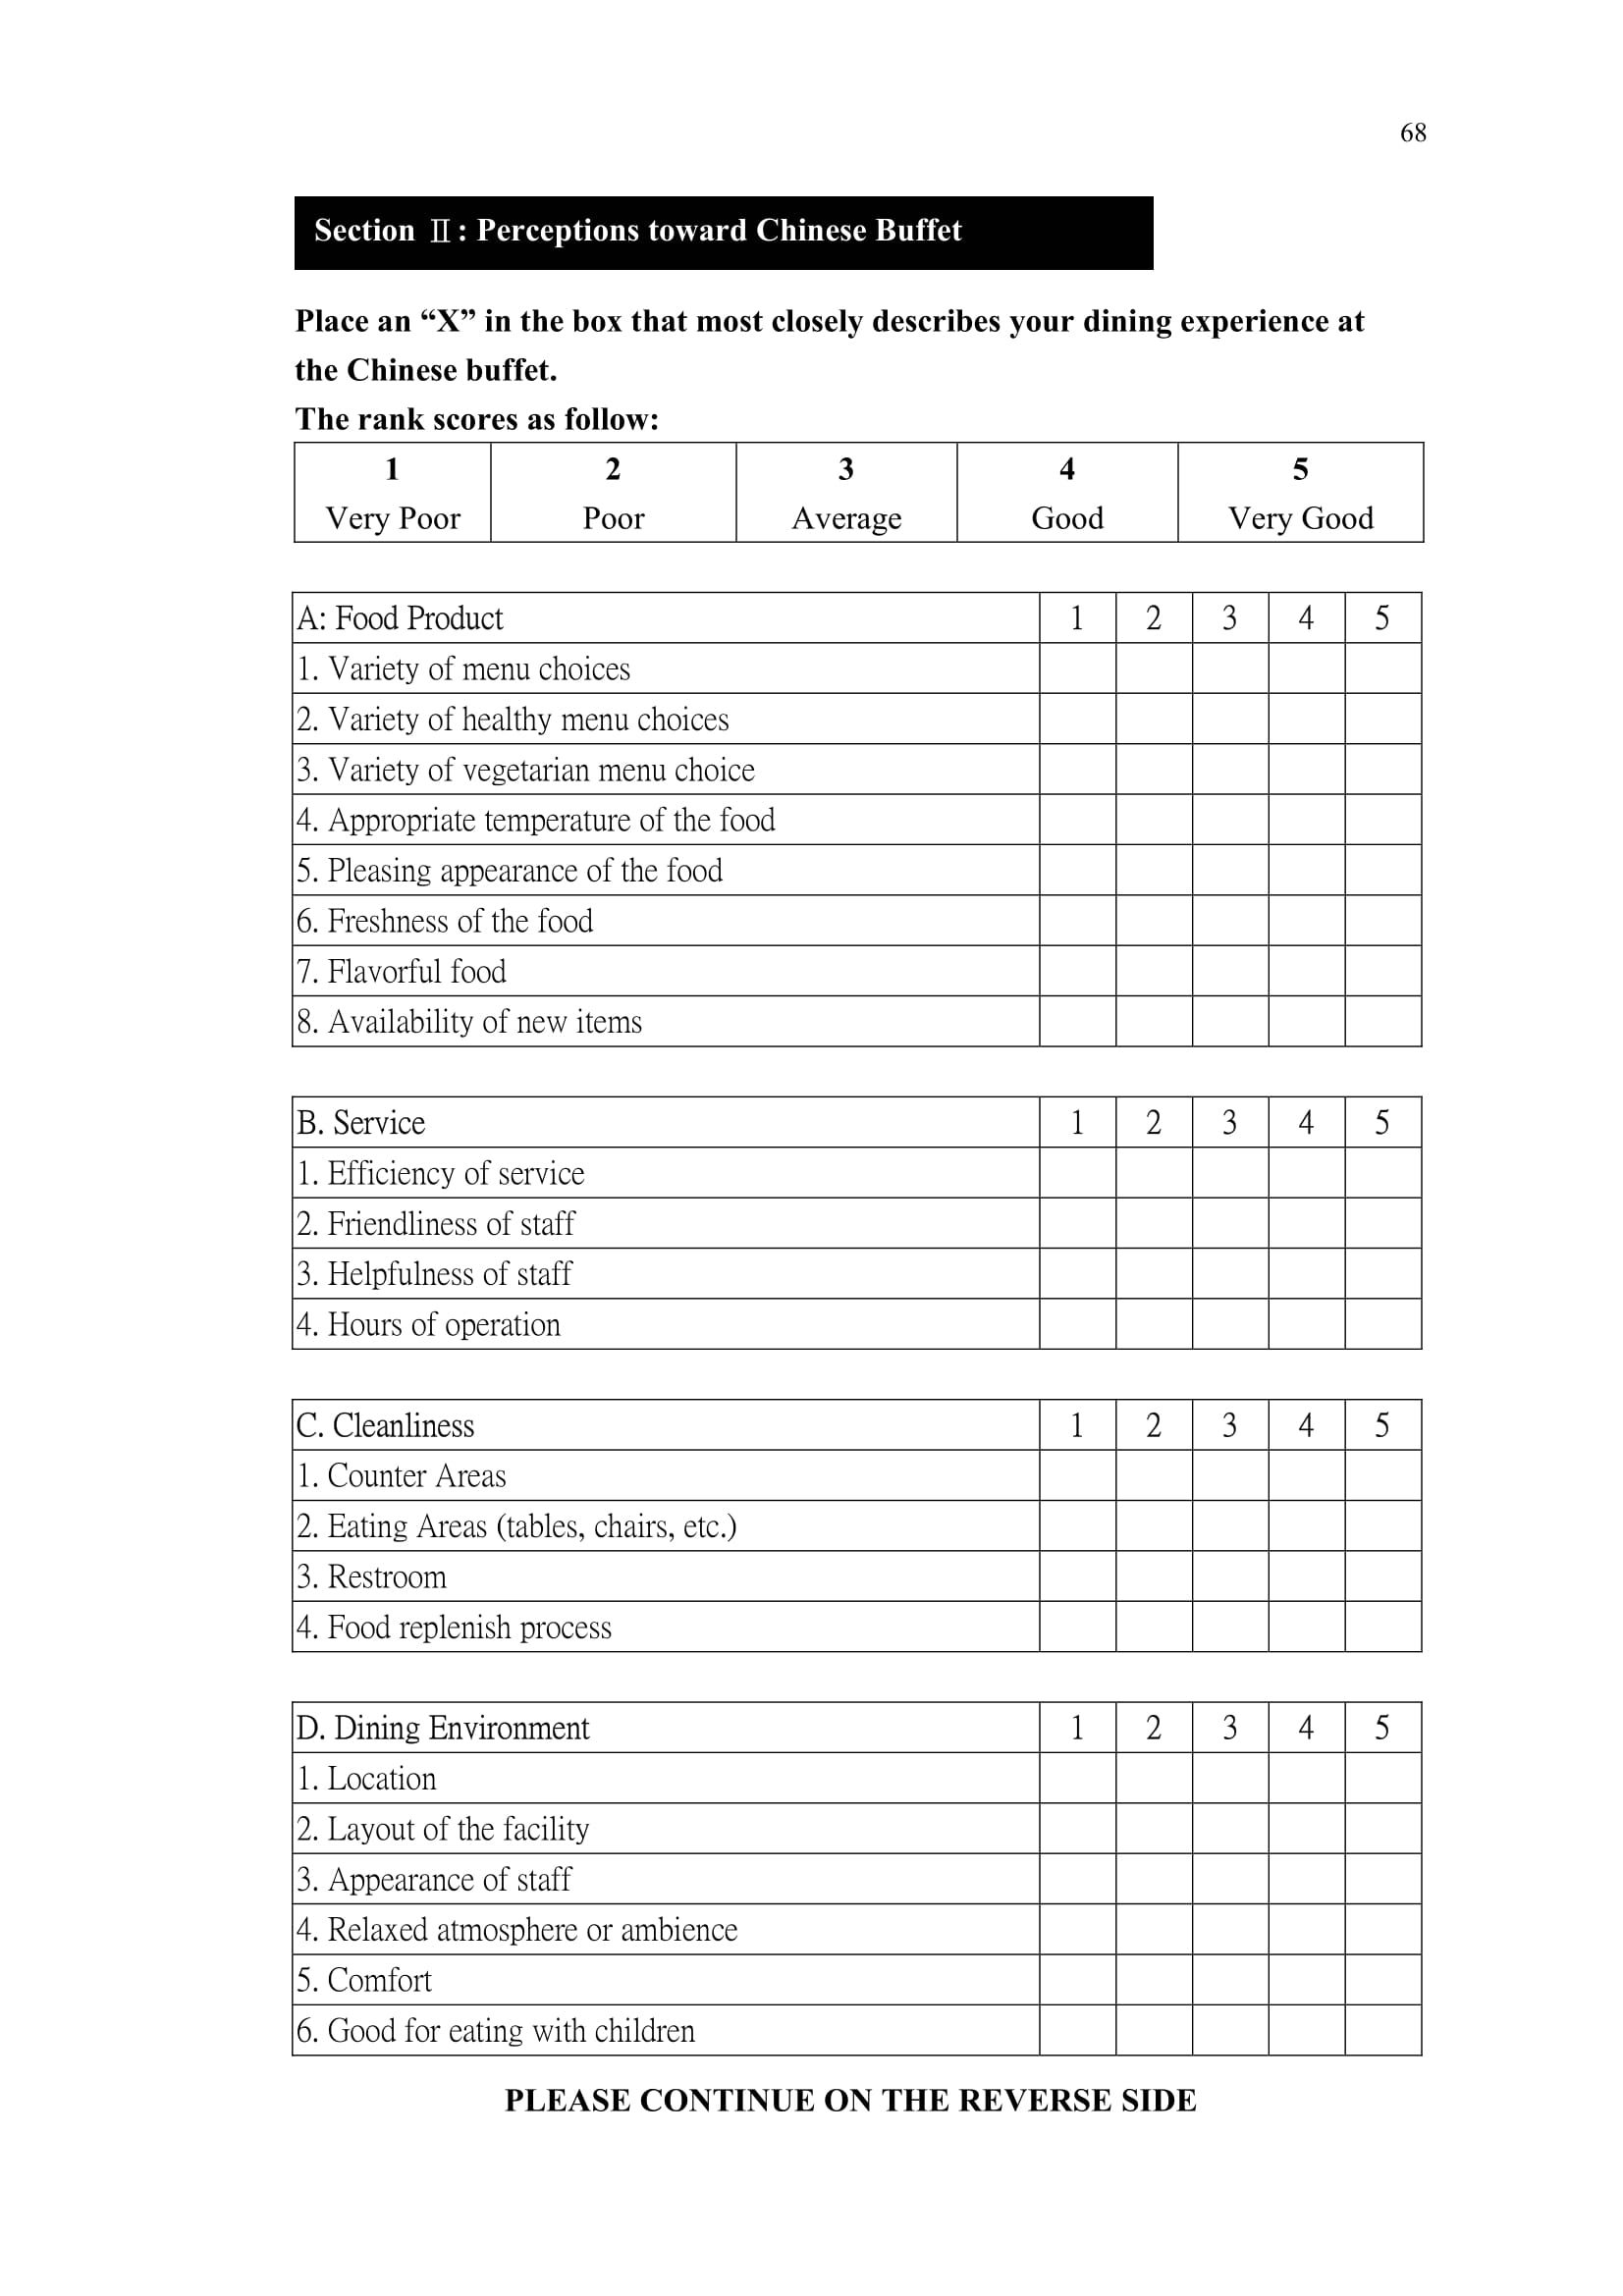 restaurant survey form pdf